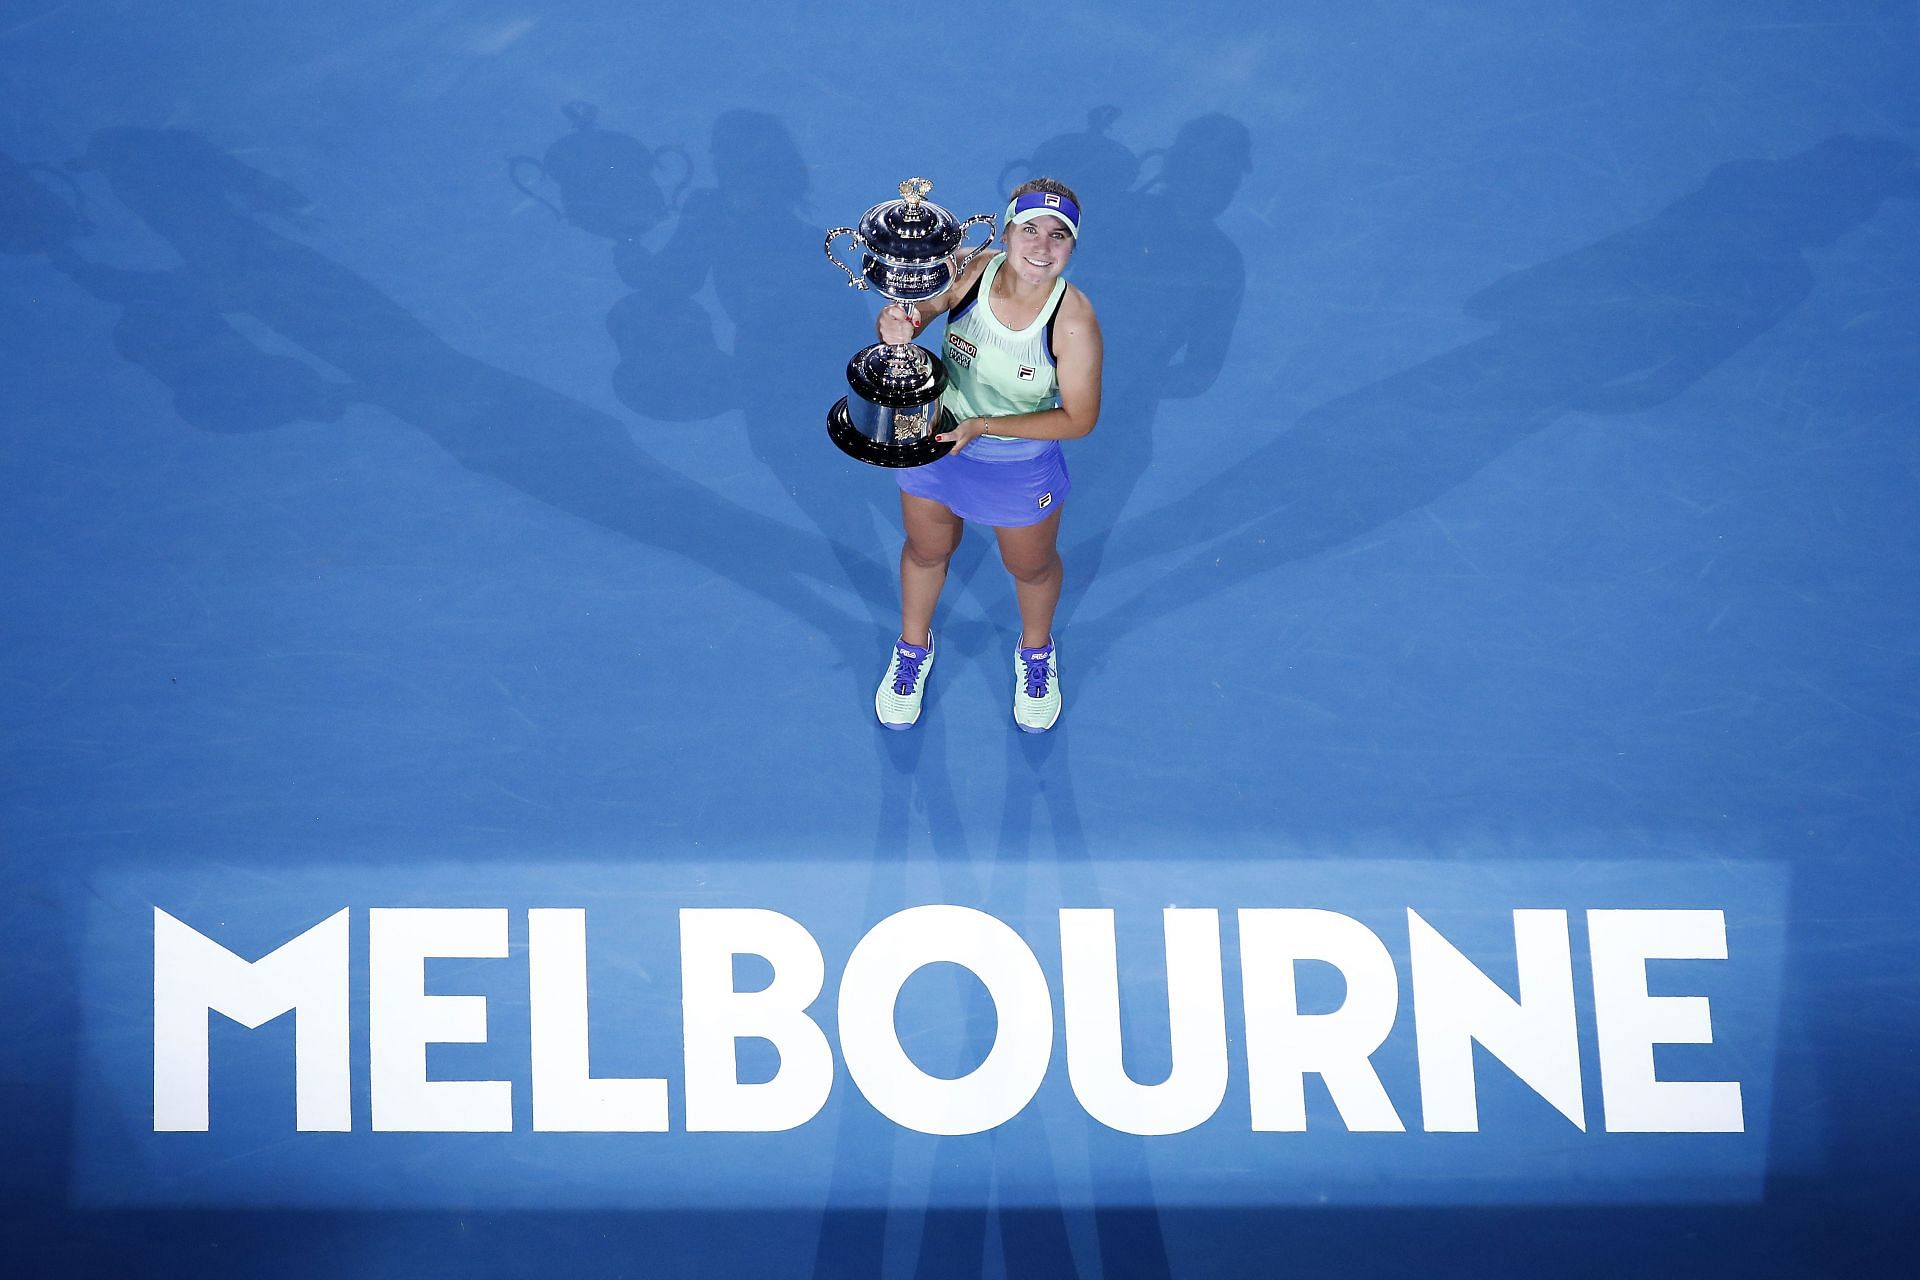 Sofia Kenin took home the 2020 Australian Open crown.